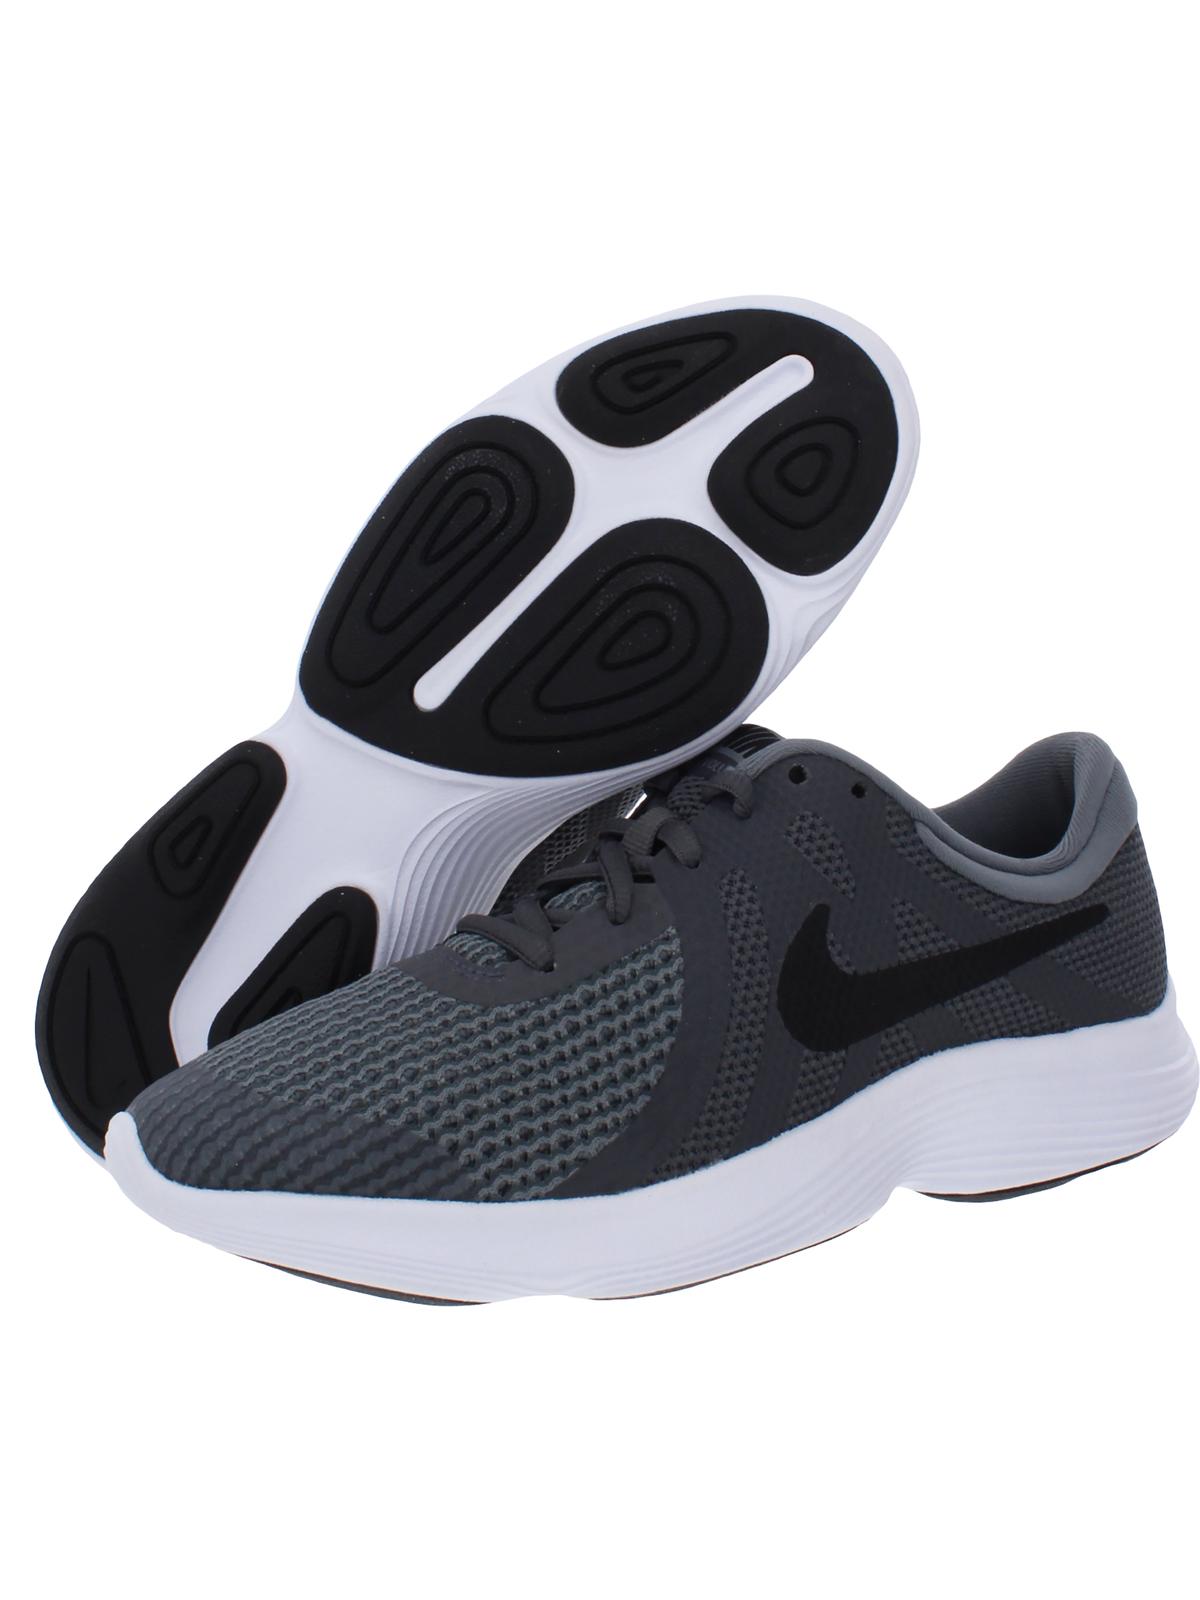 Nike 943309-005: Boys Revolution 4 (GS) Grey Running Sneakers (6 M US Big Kid) - image 2 of 2